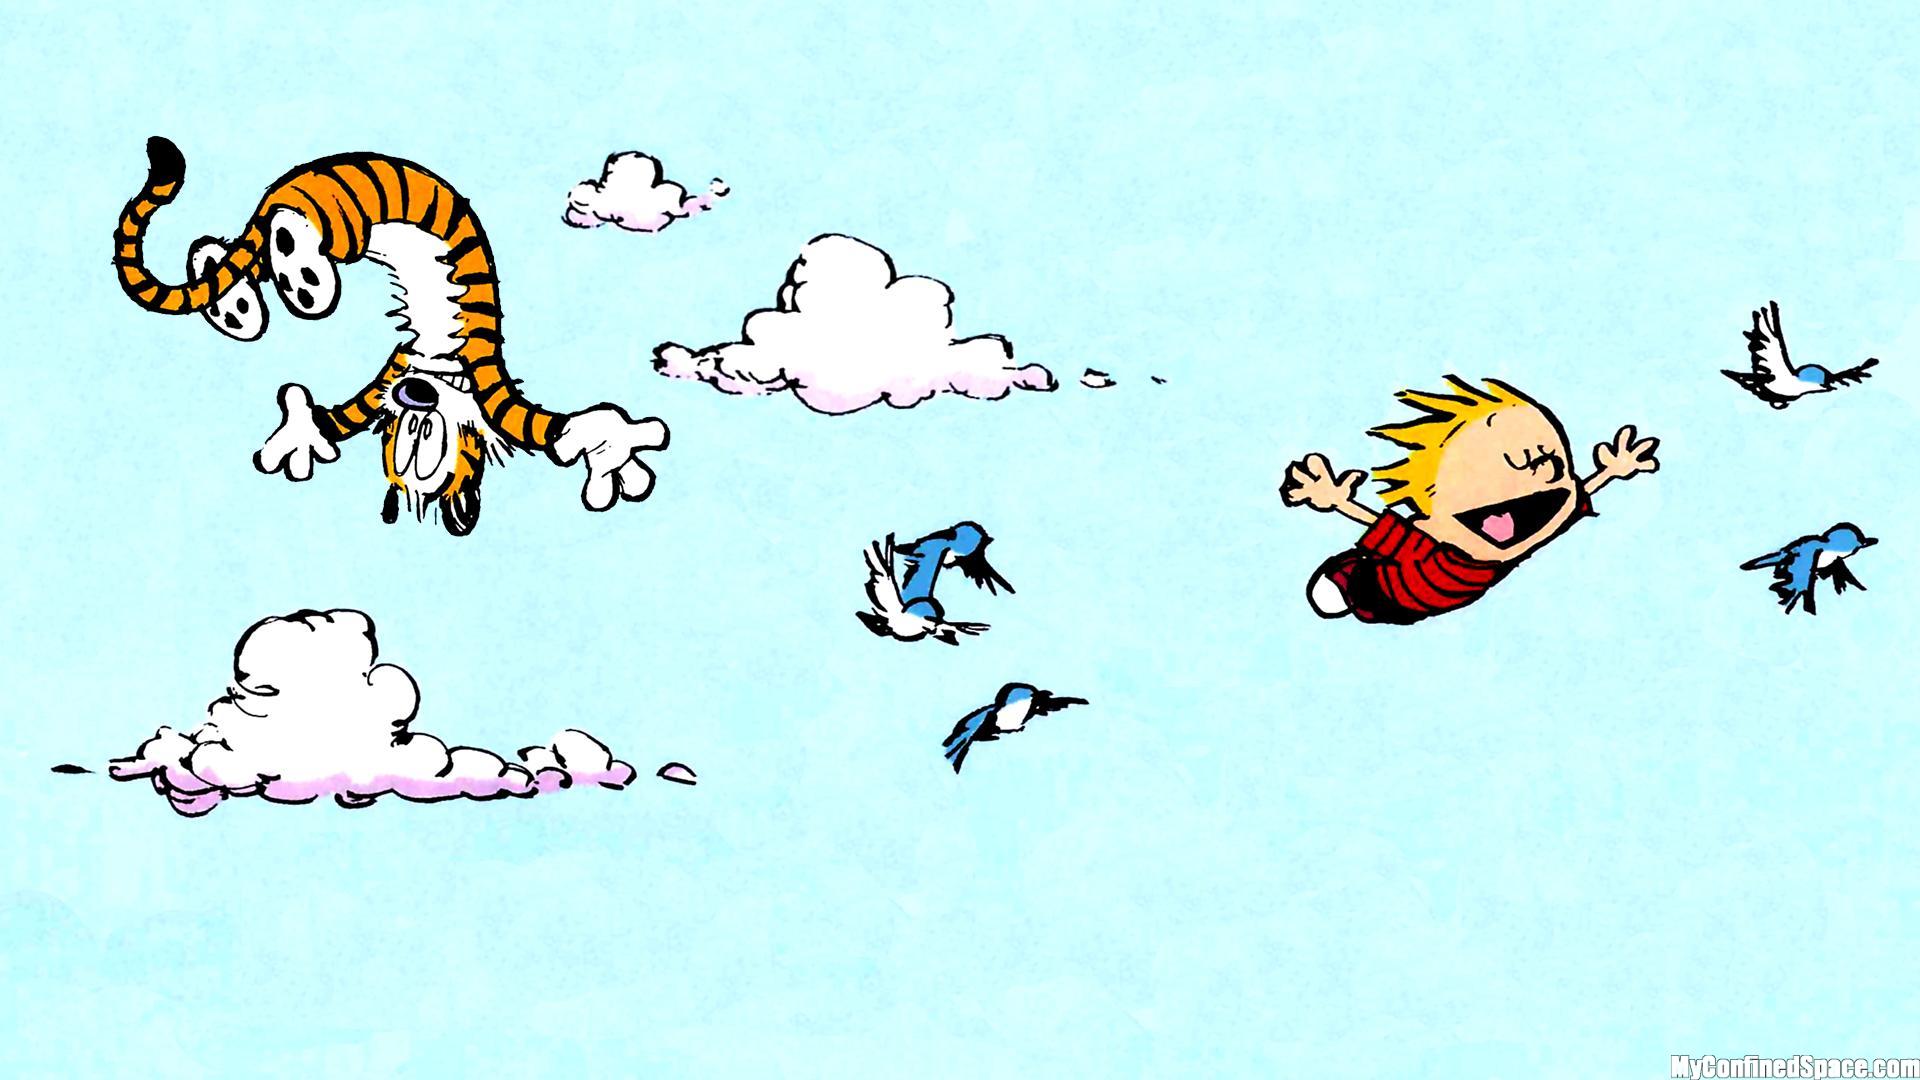 Calvin and hobbes comics j wallpaper | 1920x1080 | 162357 ...